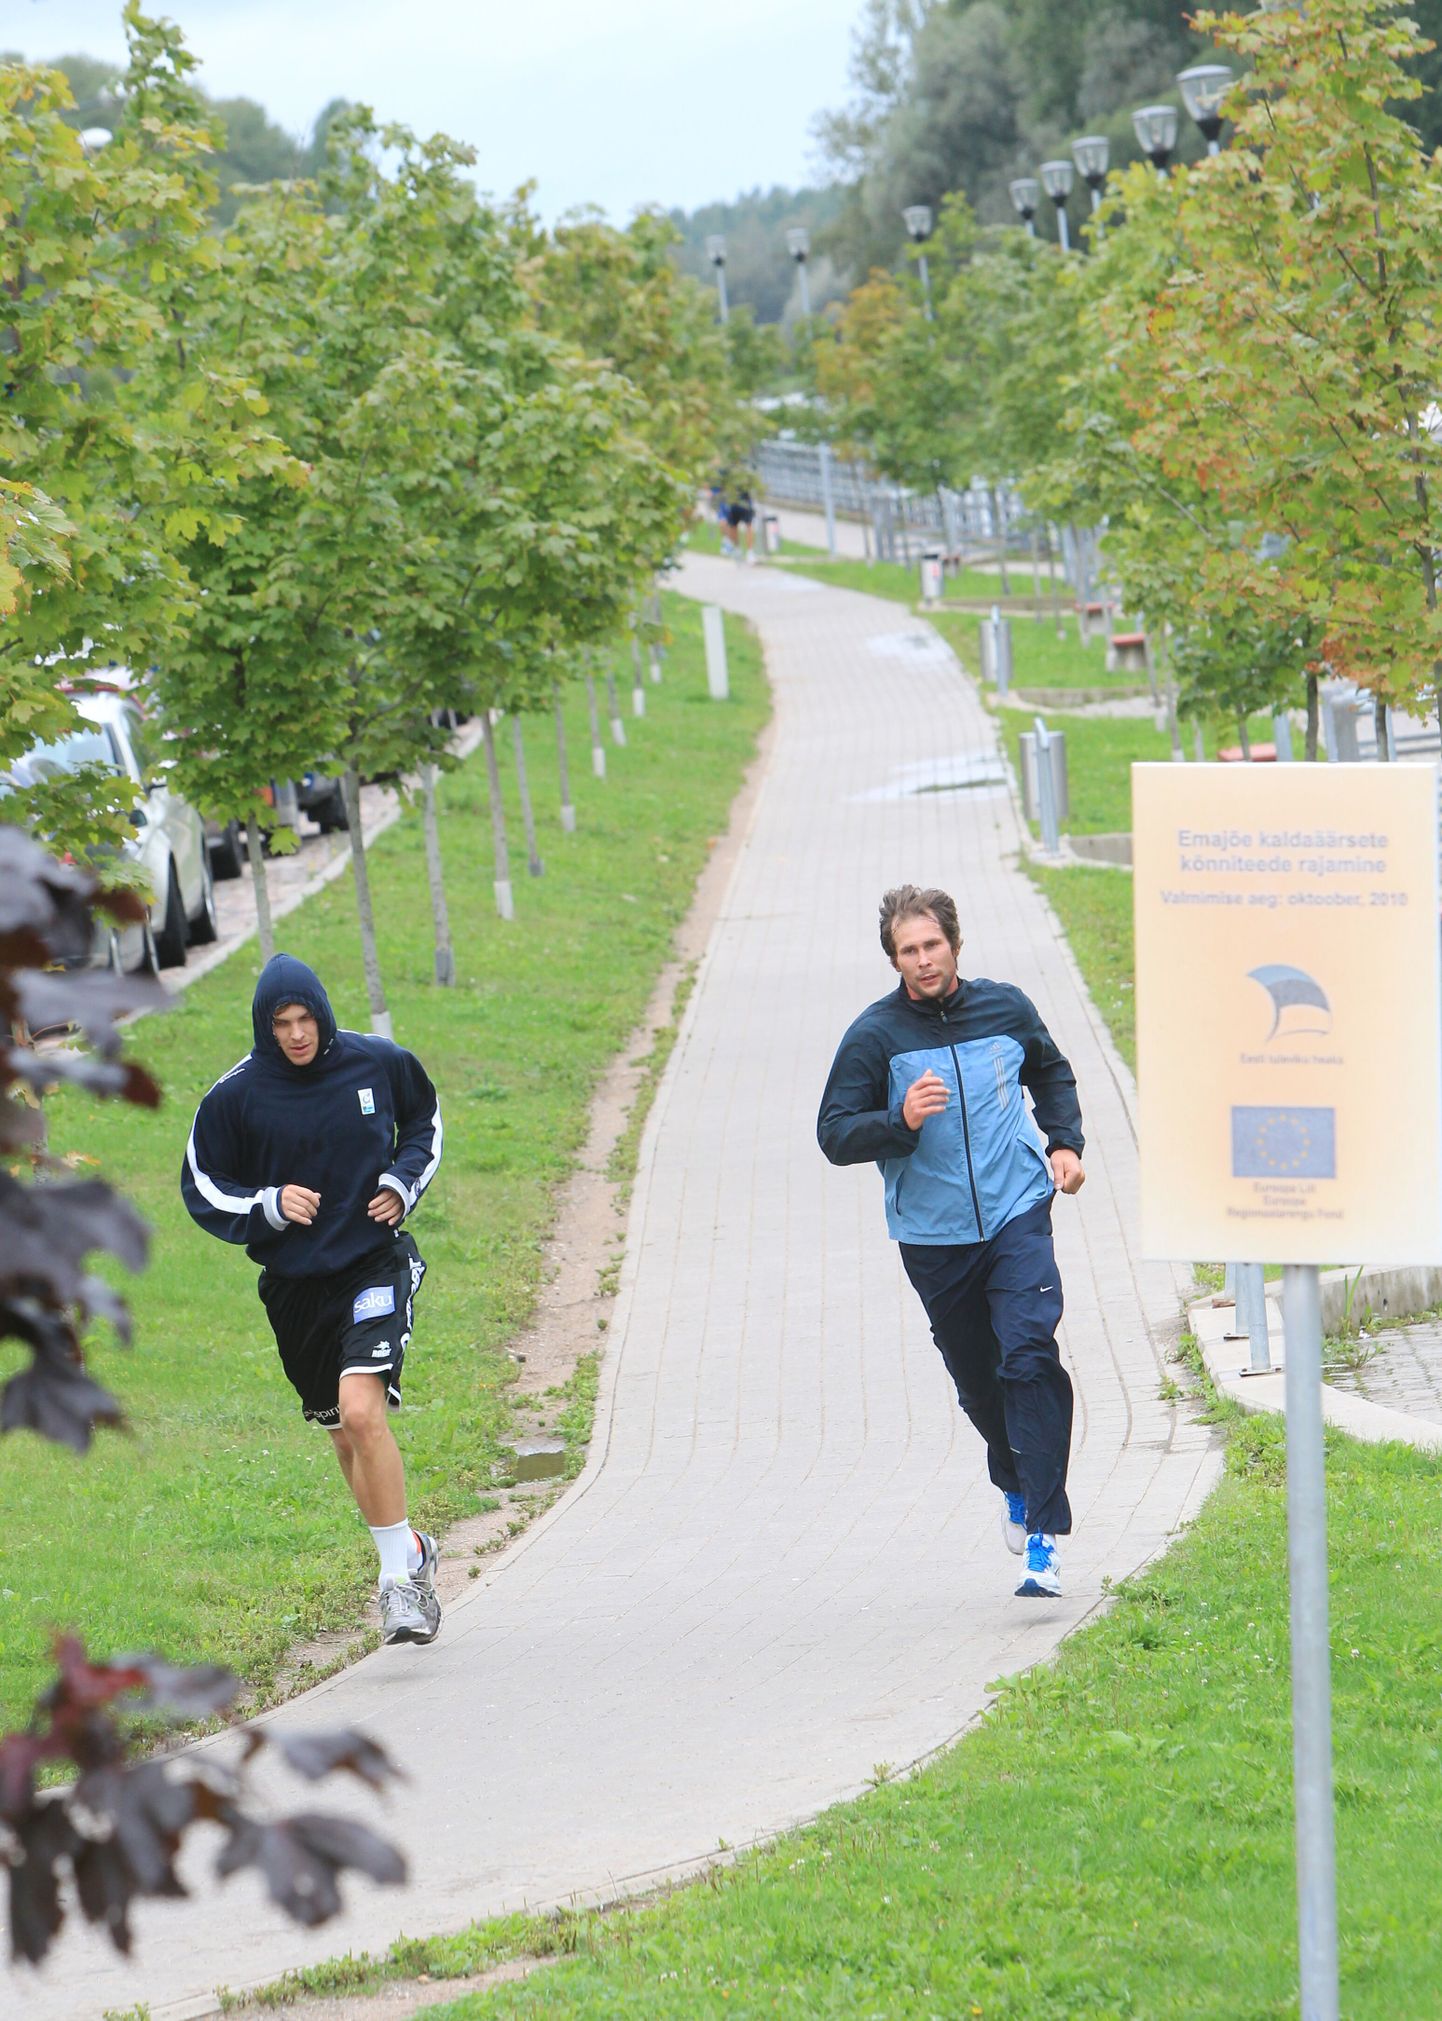 TÜ/Rocki mängijad Emajõe ääres jooksmas (pildil Augustas Peciukevicius ja Valmo Kriisa).